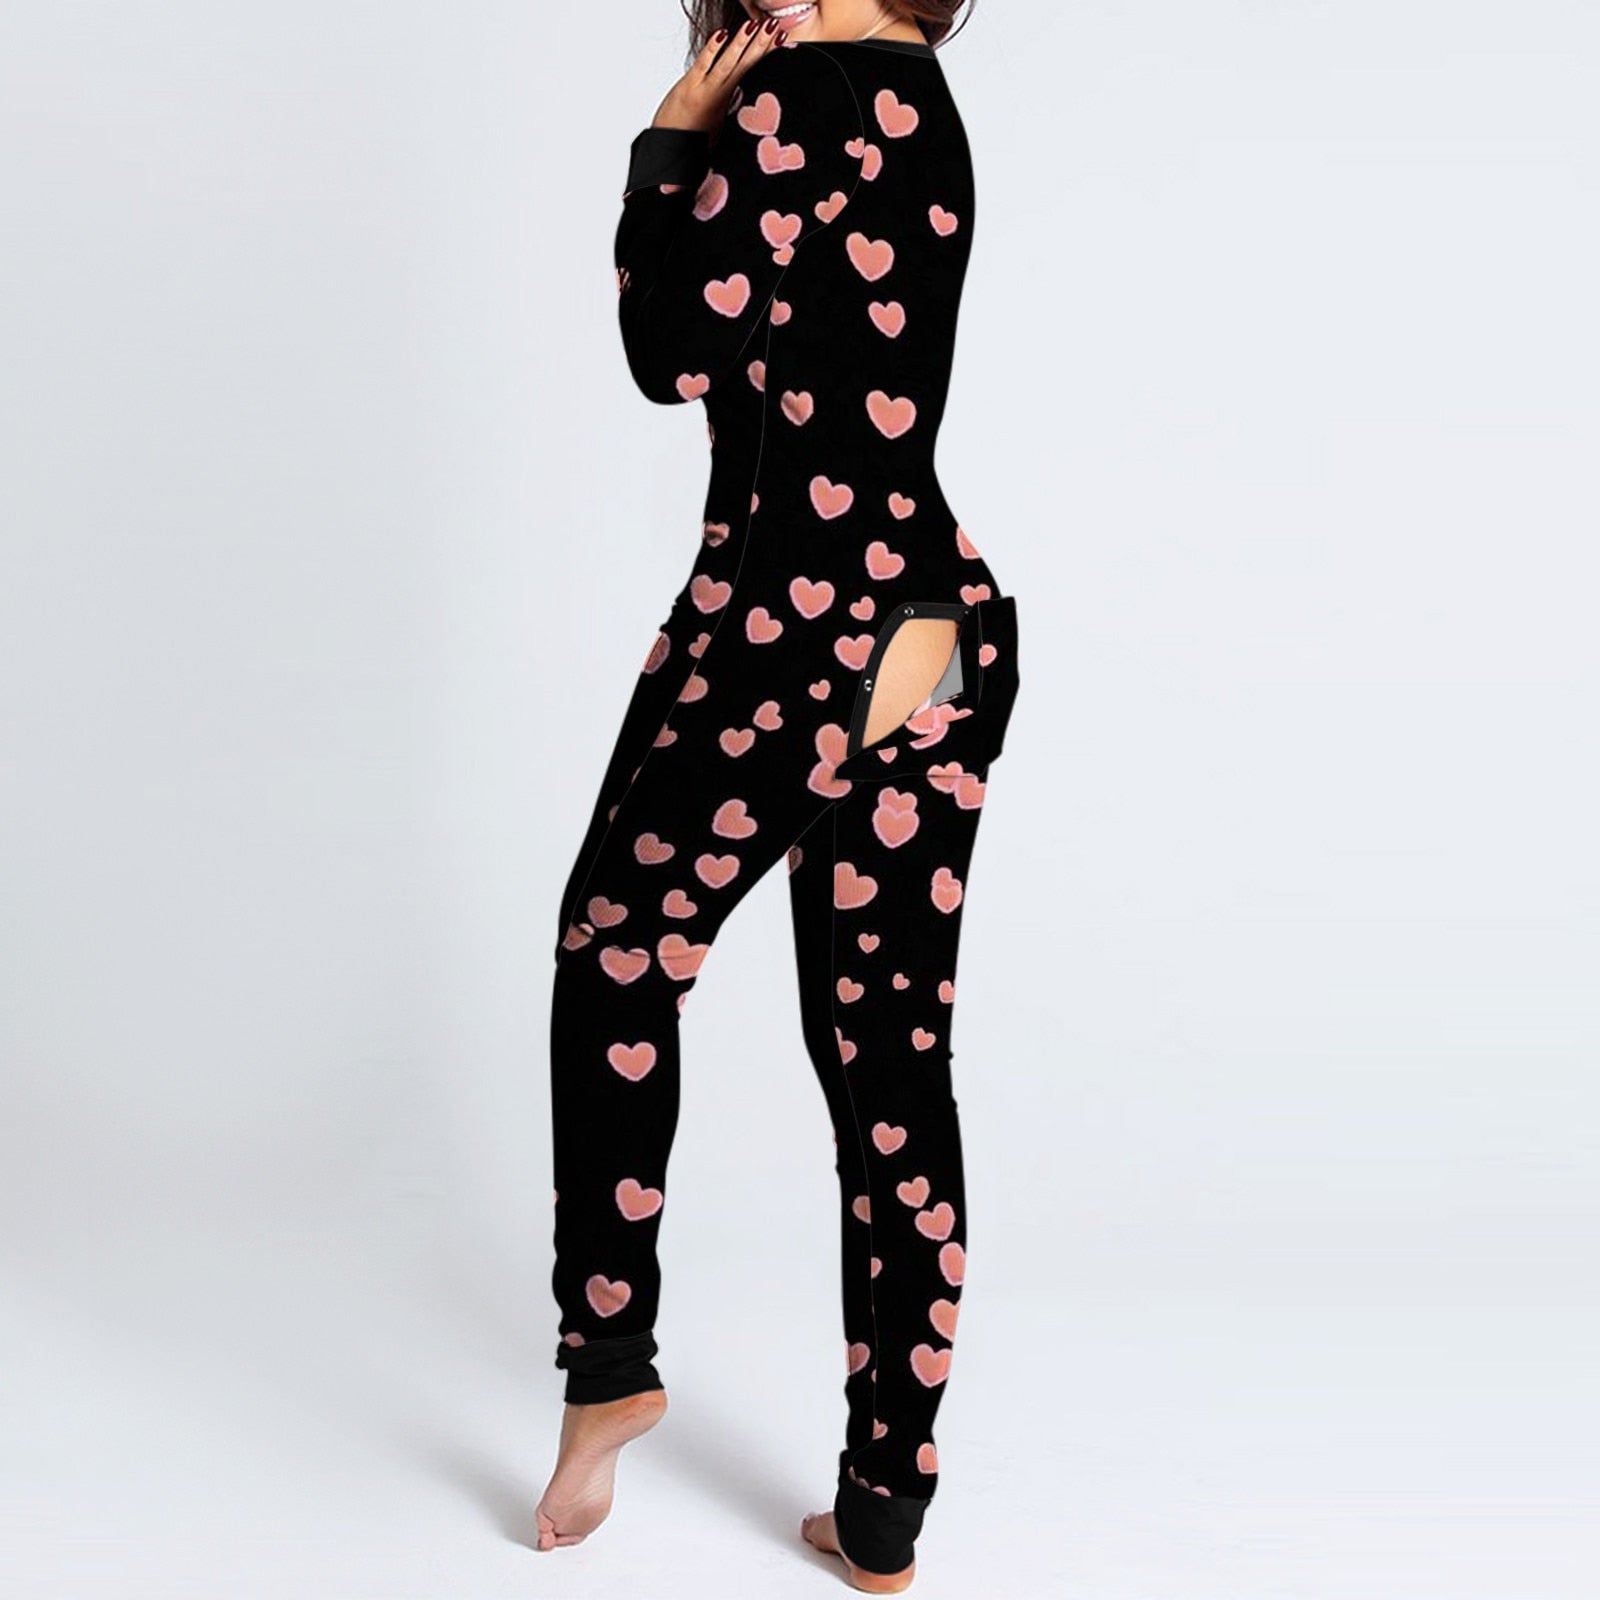 Sexy Pyjama Women's Jumpsuit Suit Onesies Button-down Back Butt Bum Open Ass Flap Jumpsuit Heart Print Loungewear Bodysuit